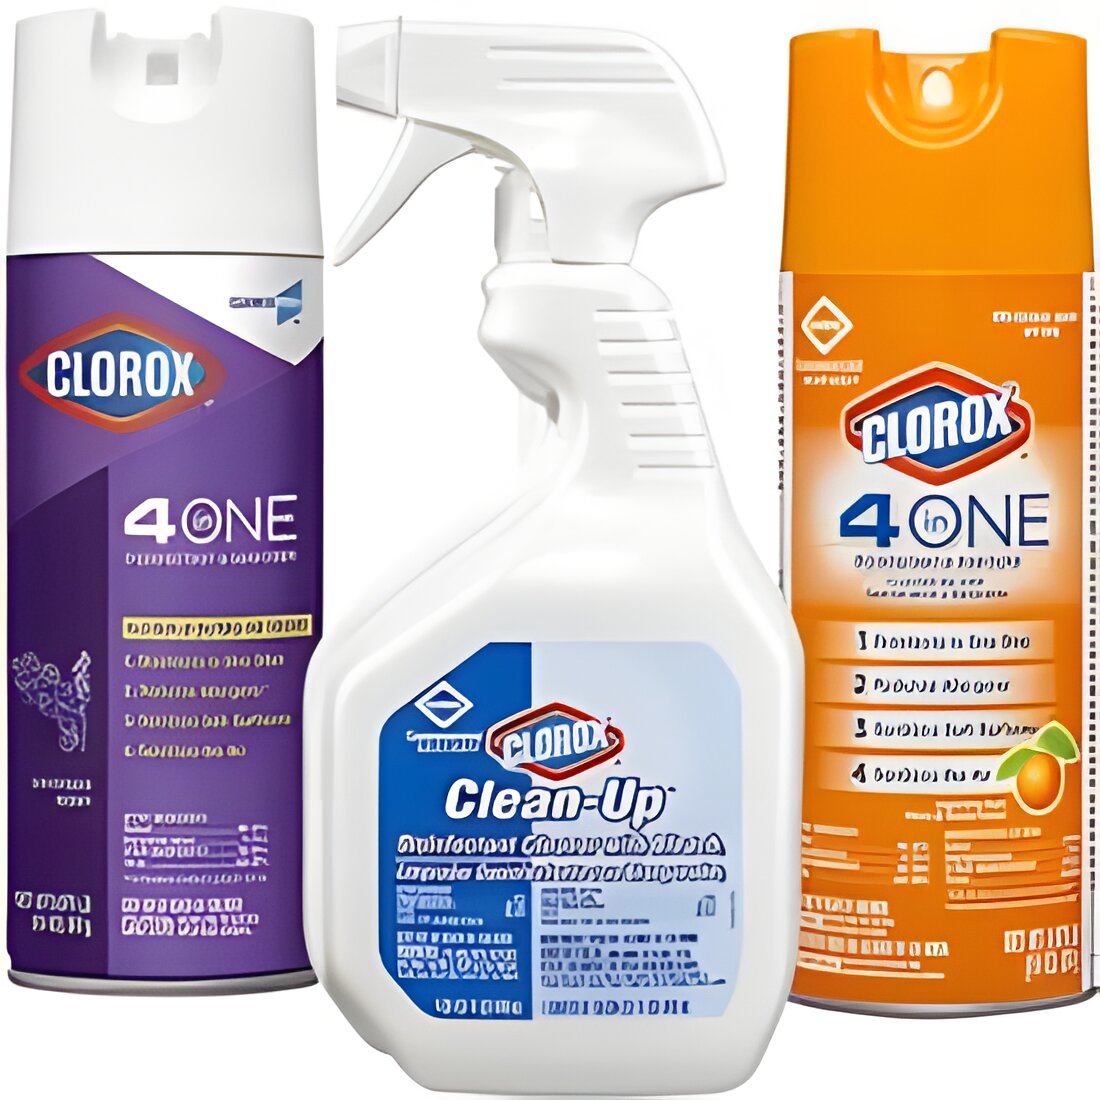 Free Clorox Disinfectants Samples